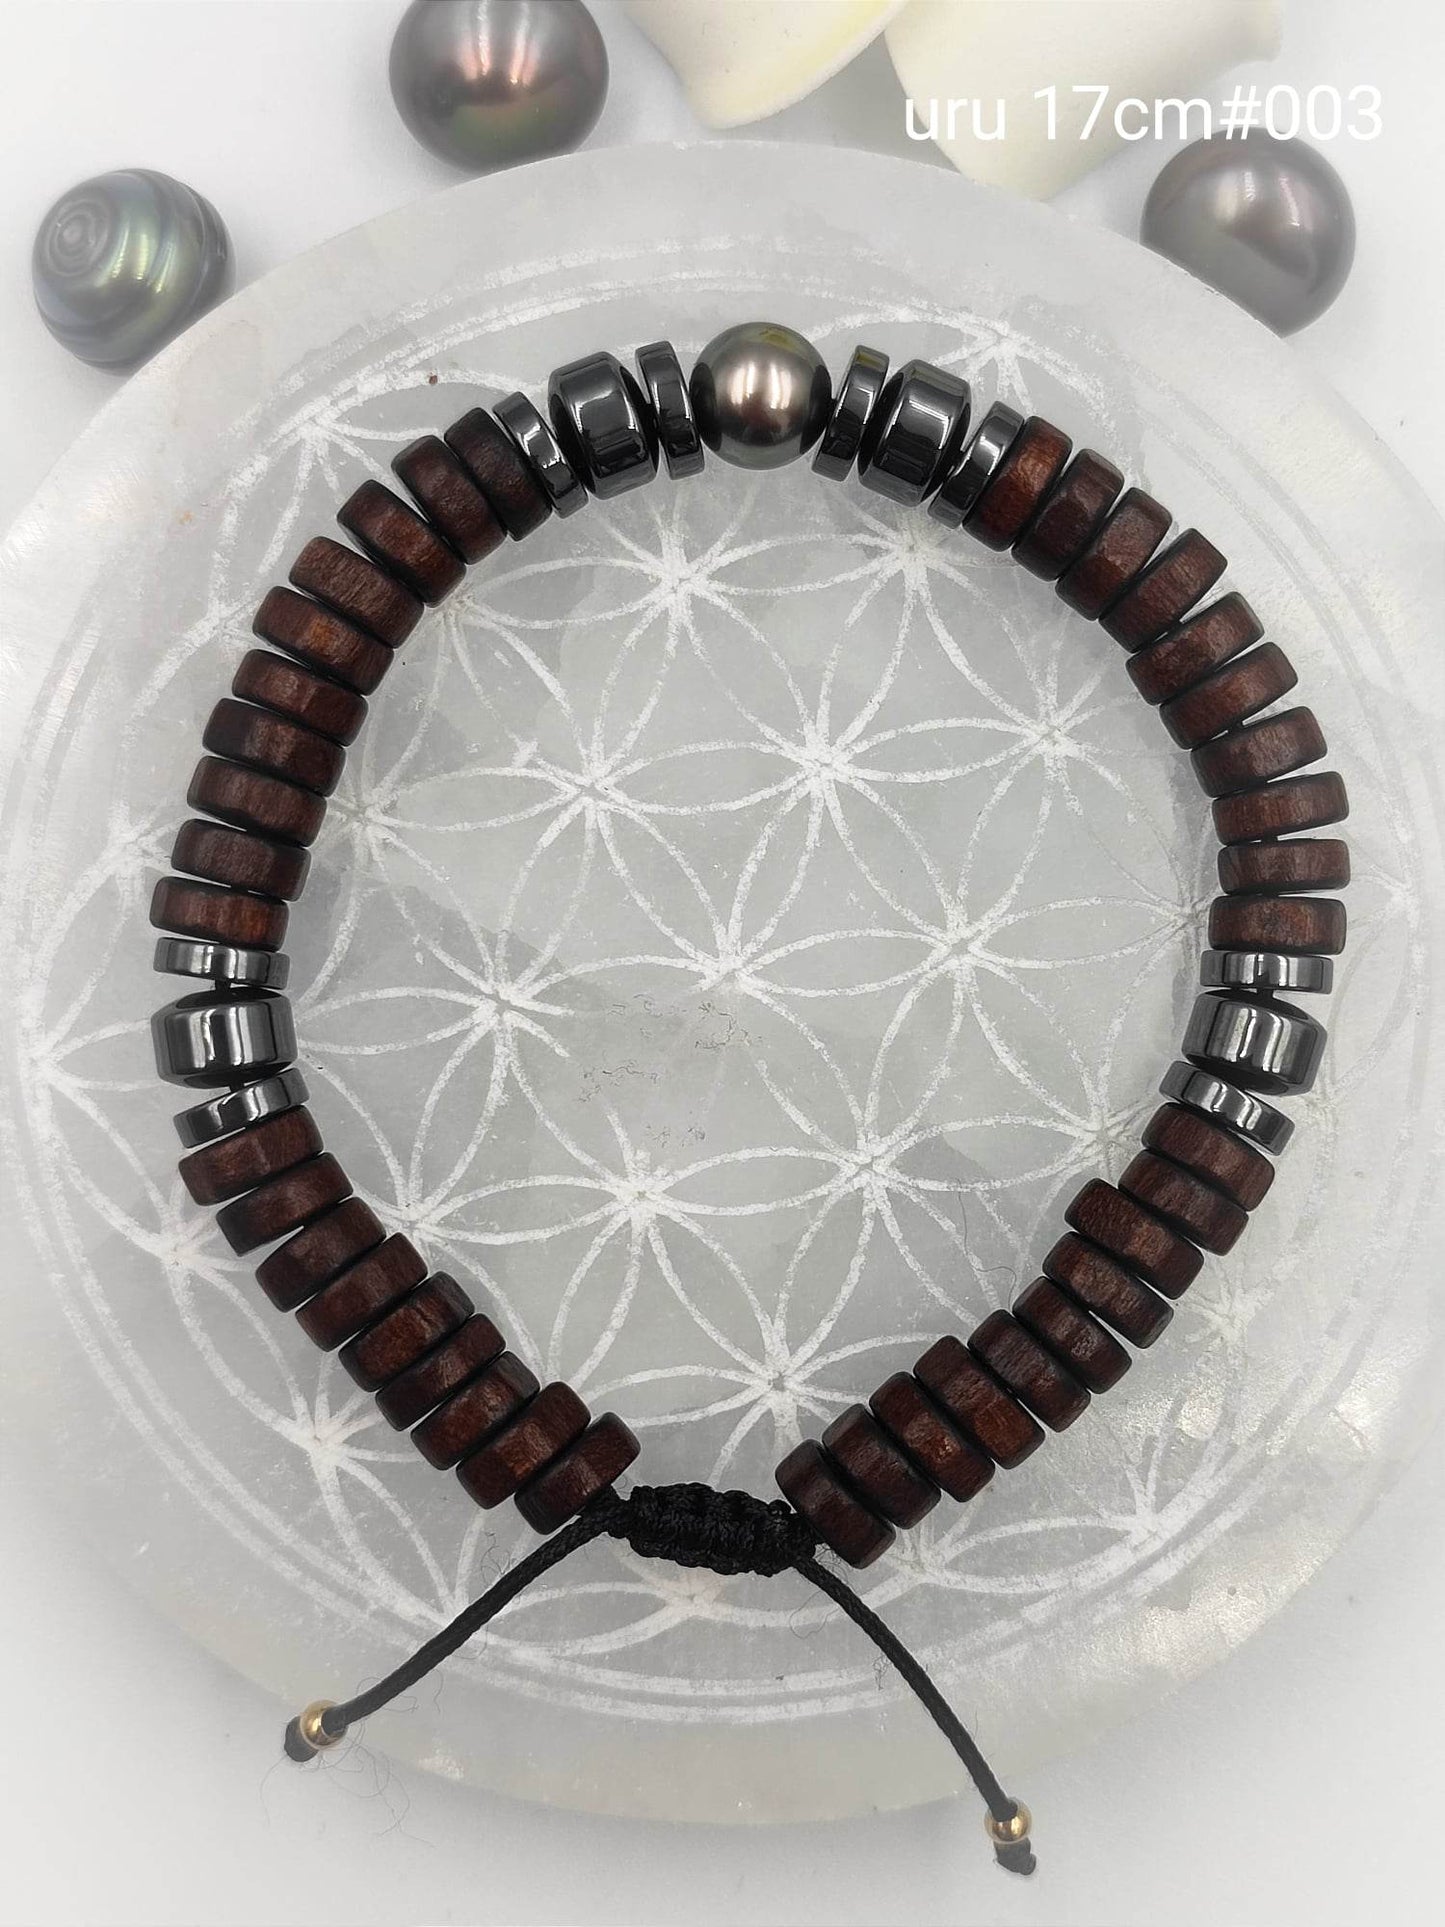 Bracelet homme "'Uru" Perle de Tahiti 17cm #003